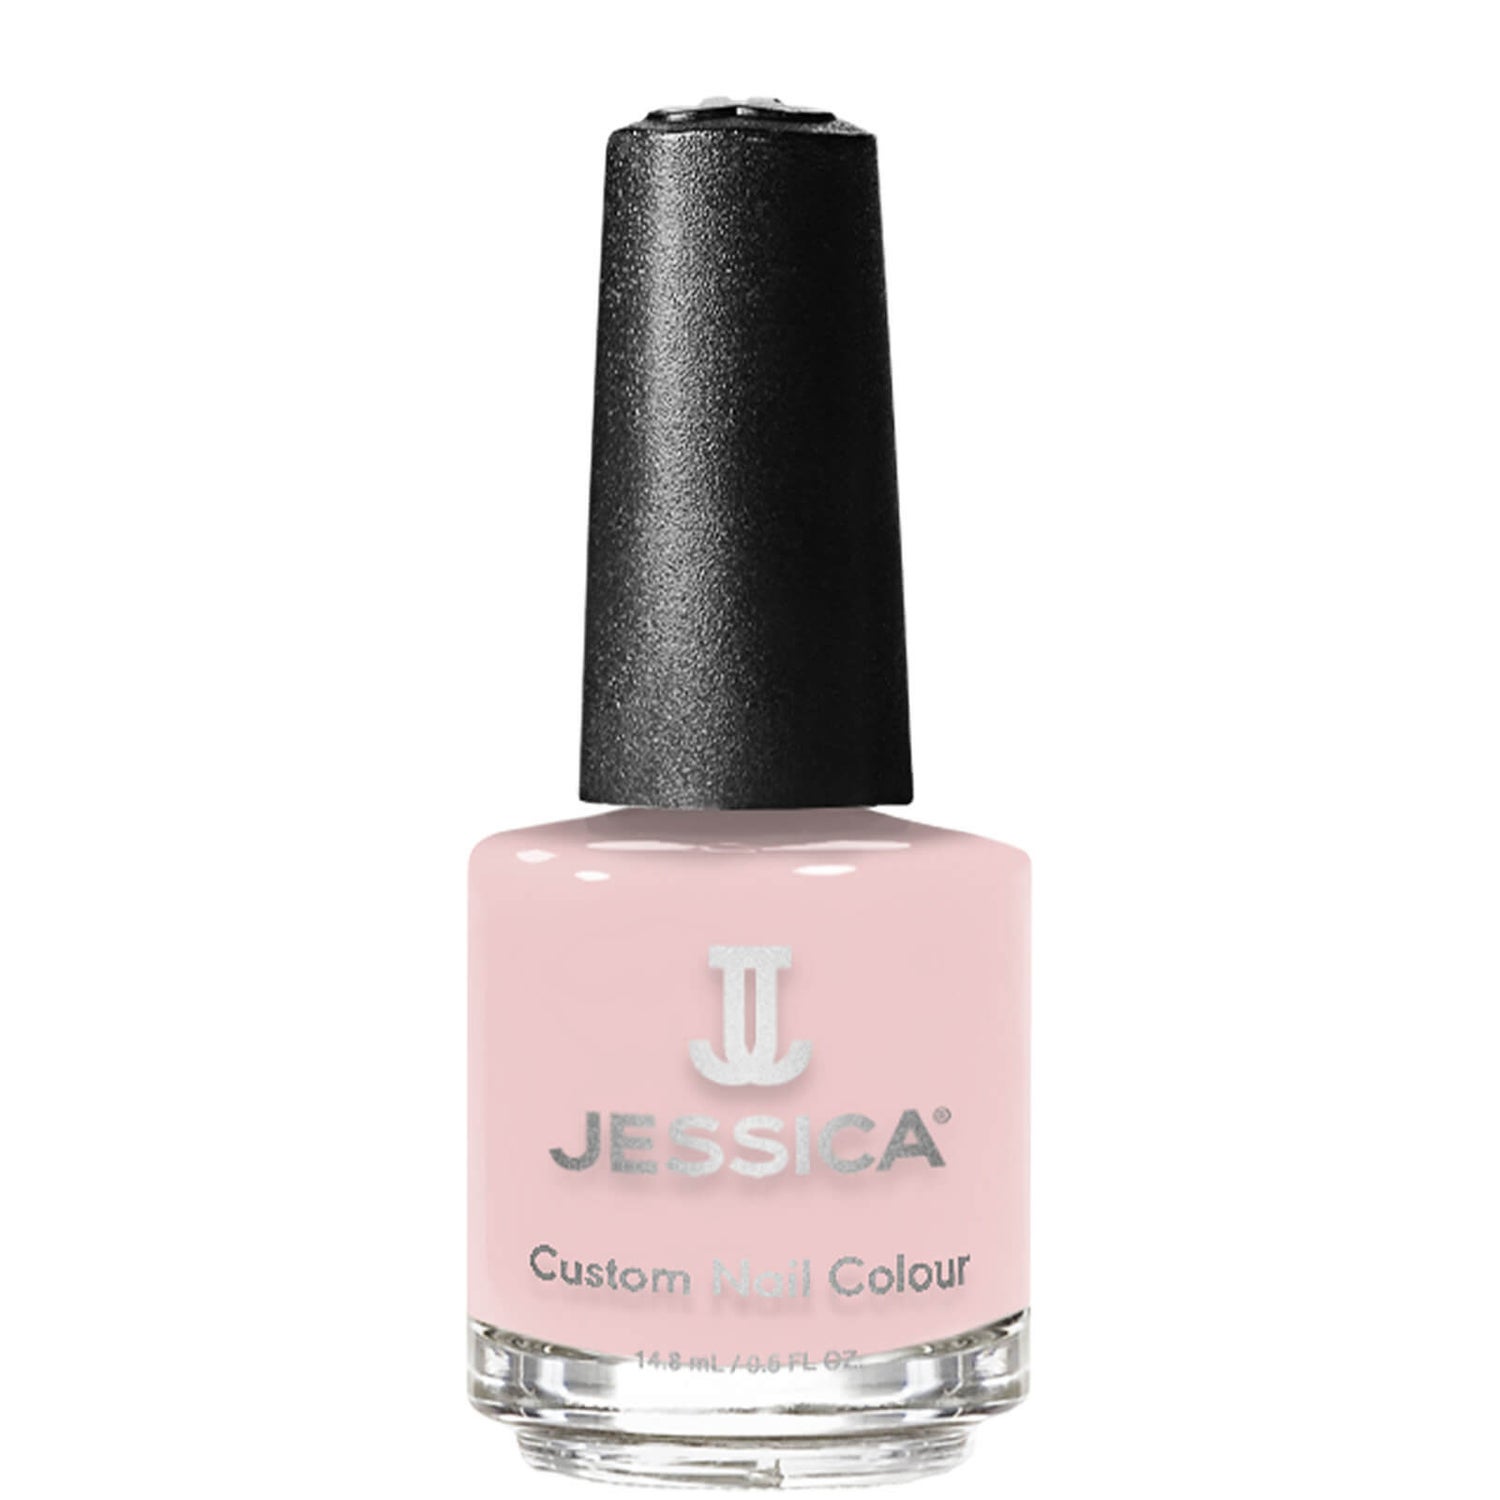 Jessica Custom Colour Nail Polish 14.8ml (Various Shades)